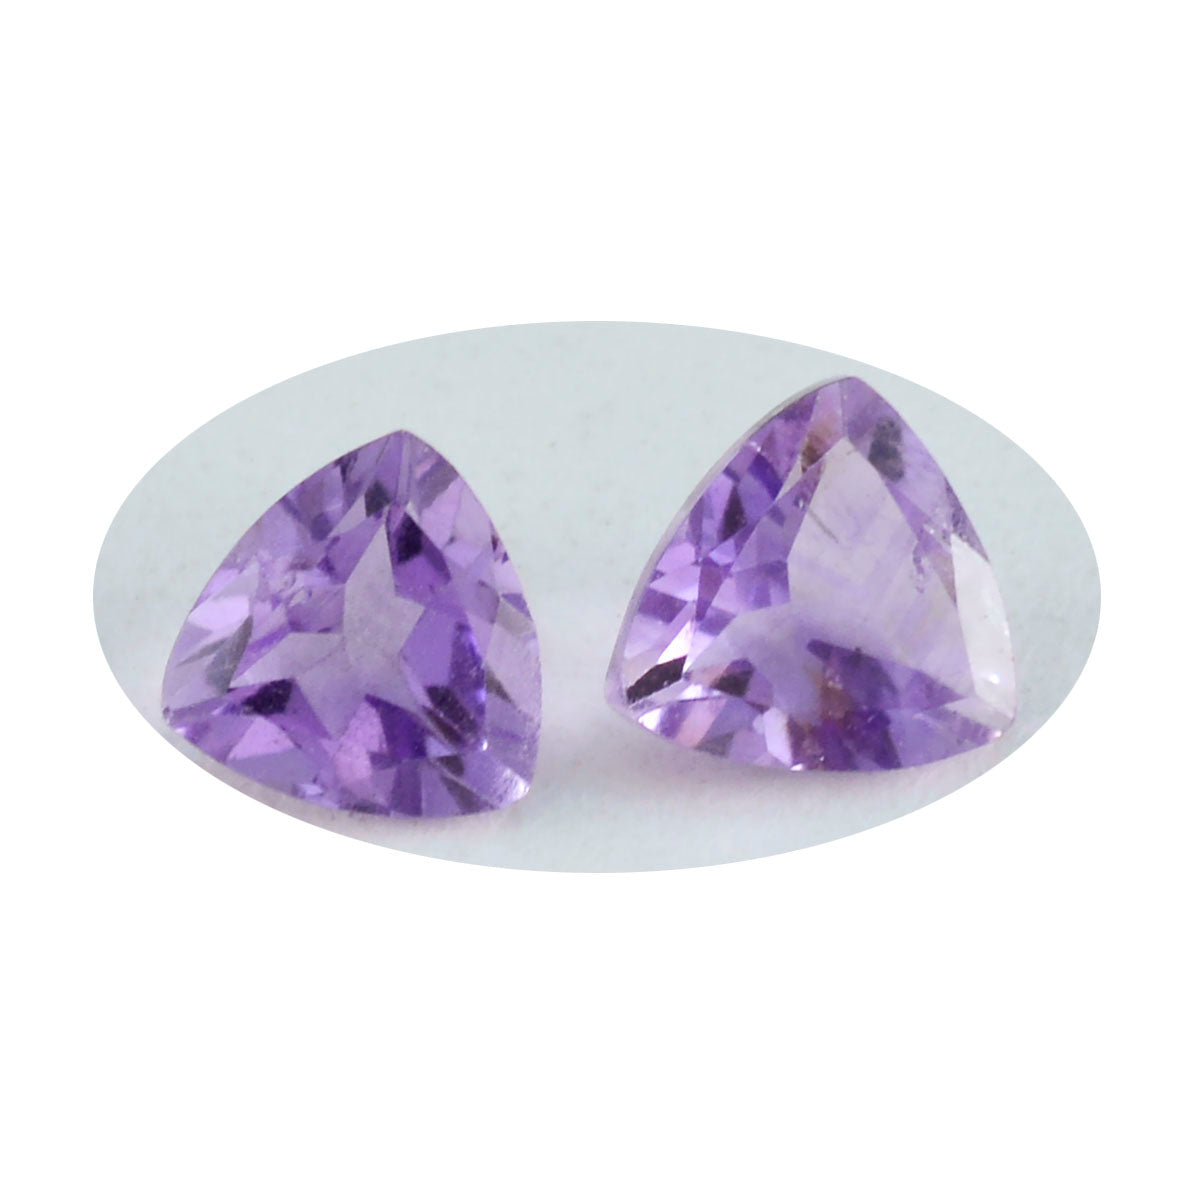 Riyogems 1PC Natural Purple Amethyst Faceted 8x8 mm Trillion Shape fantastic Quality Loose Gems